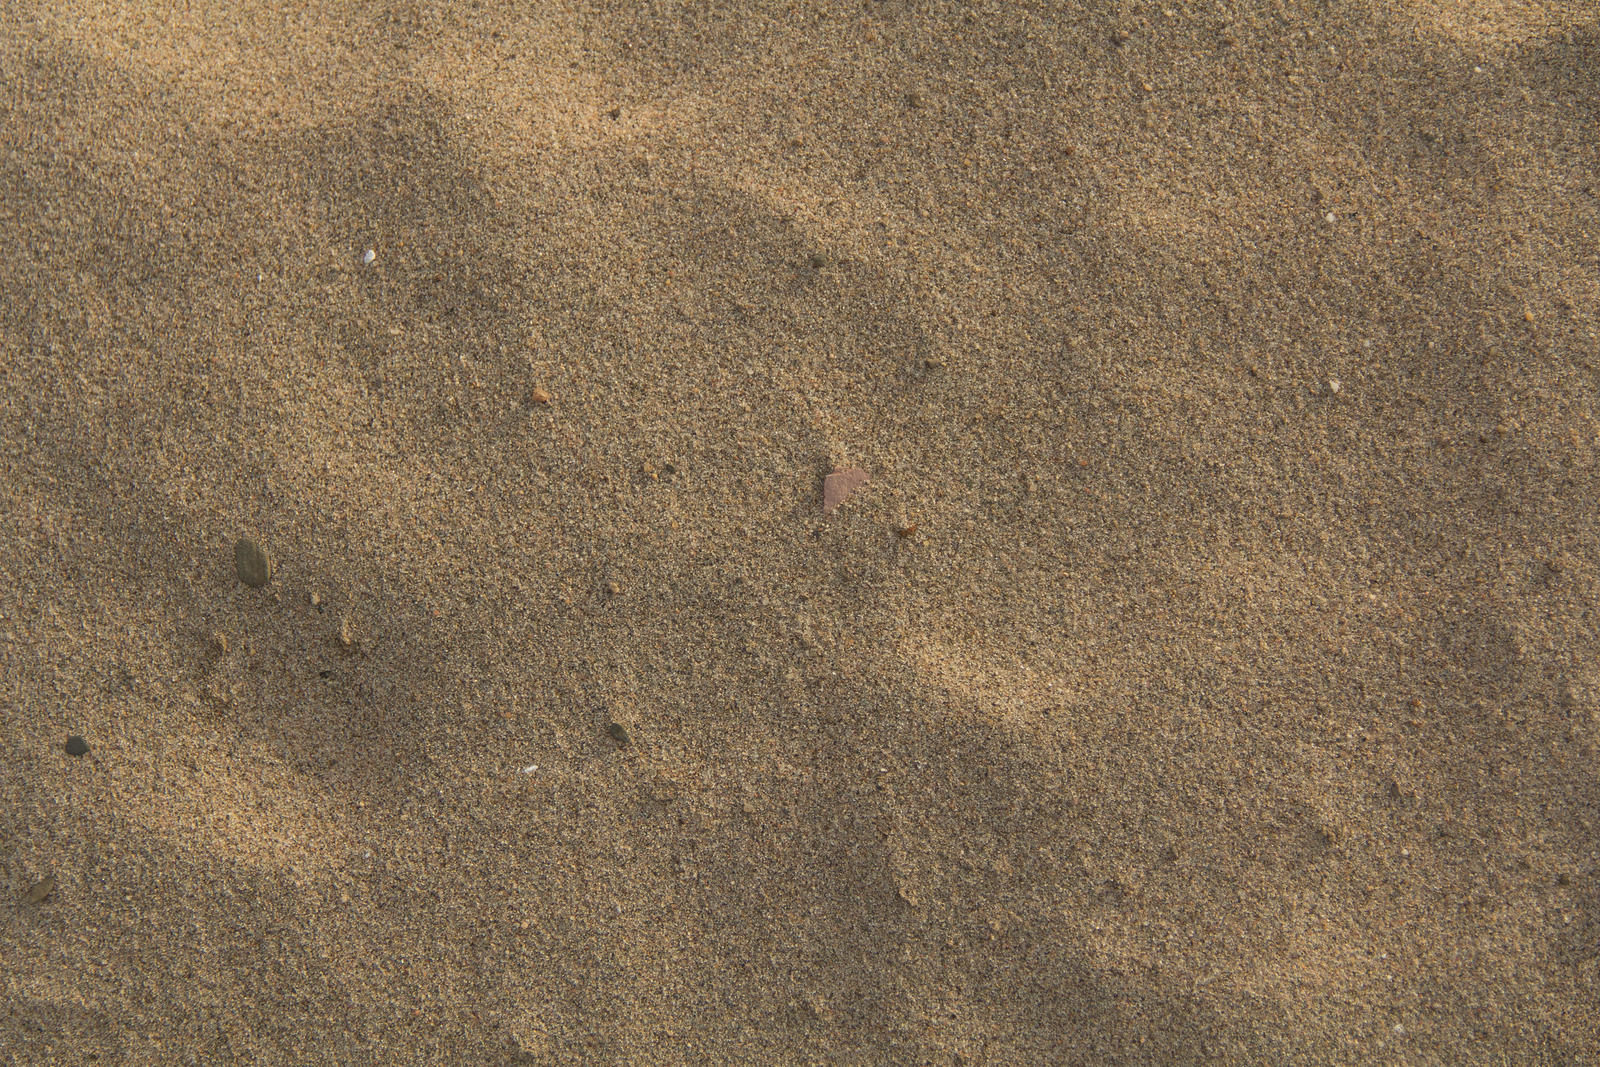 Free Texture #24: Shoreline Sand 03